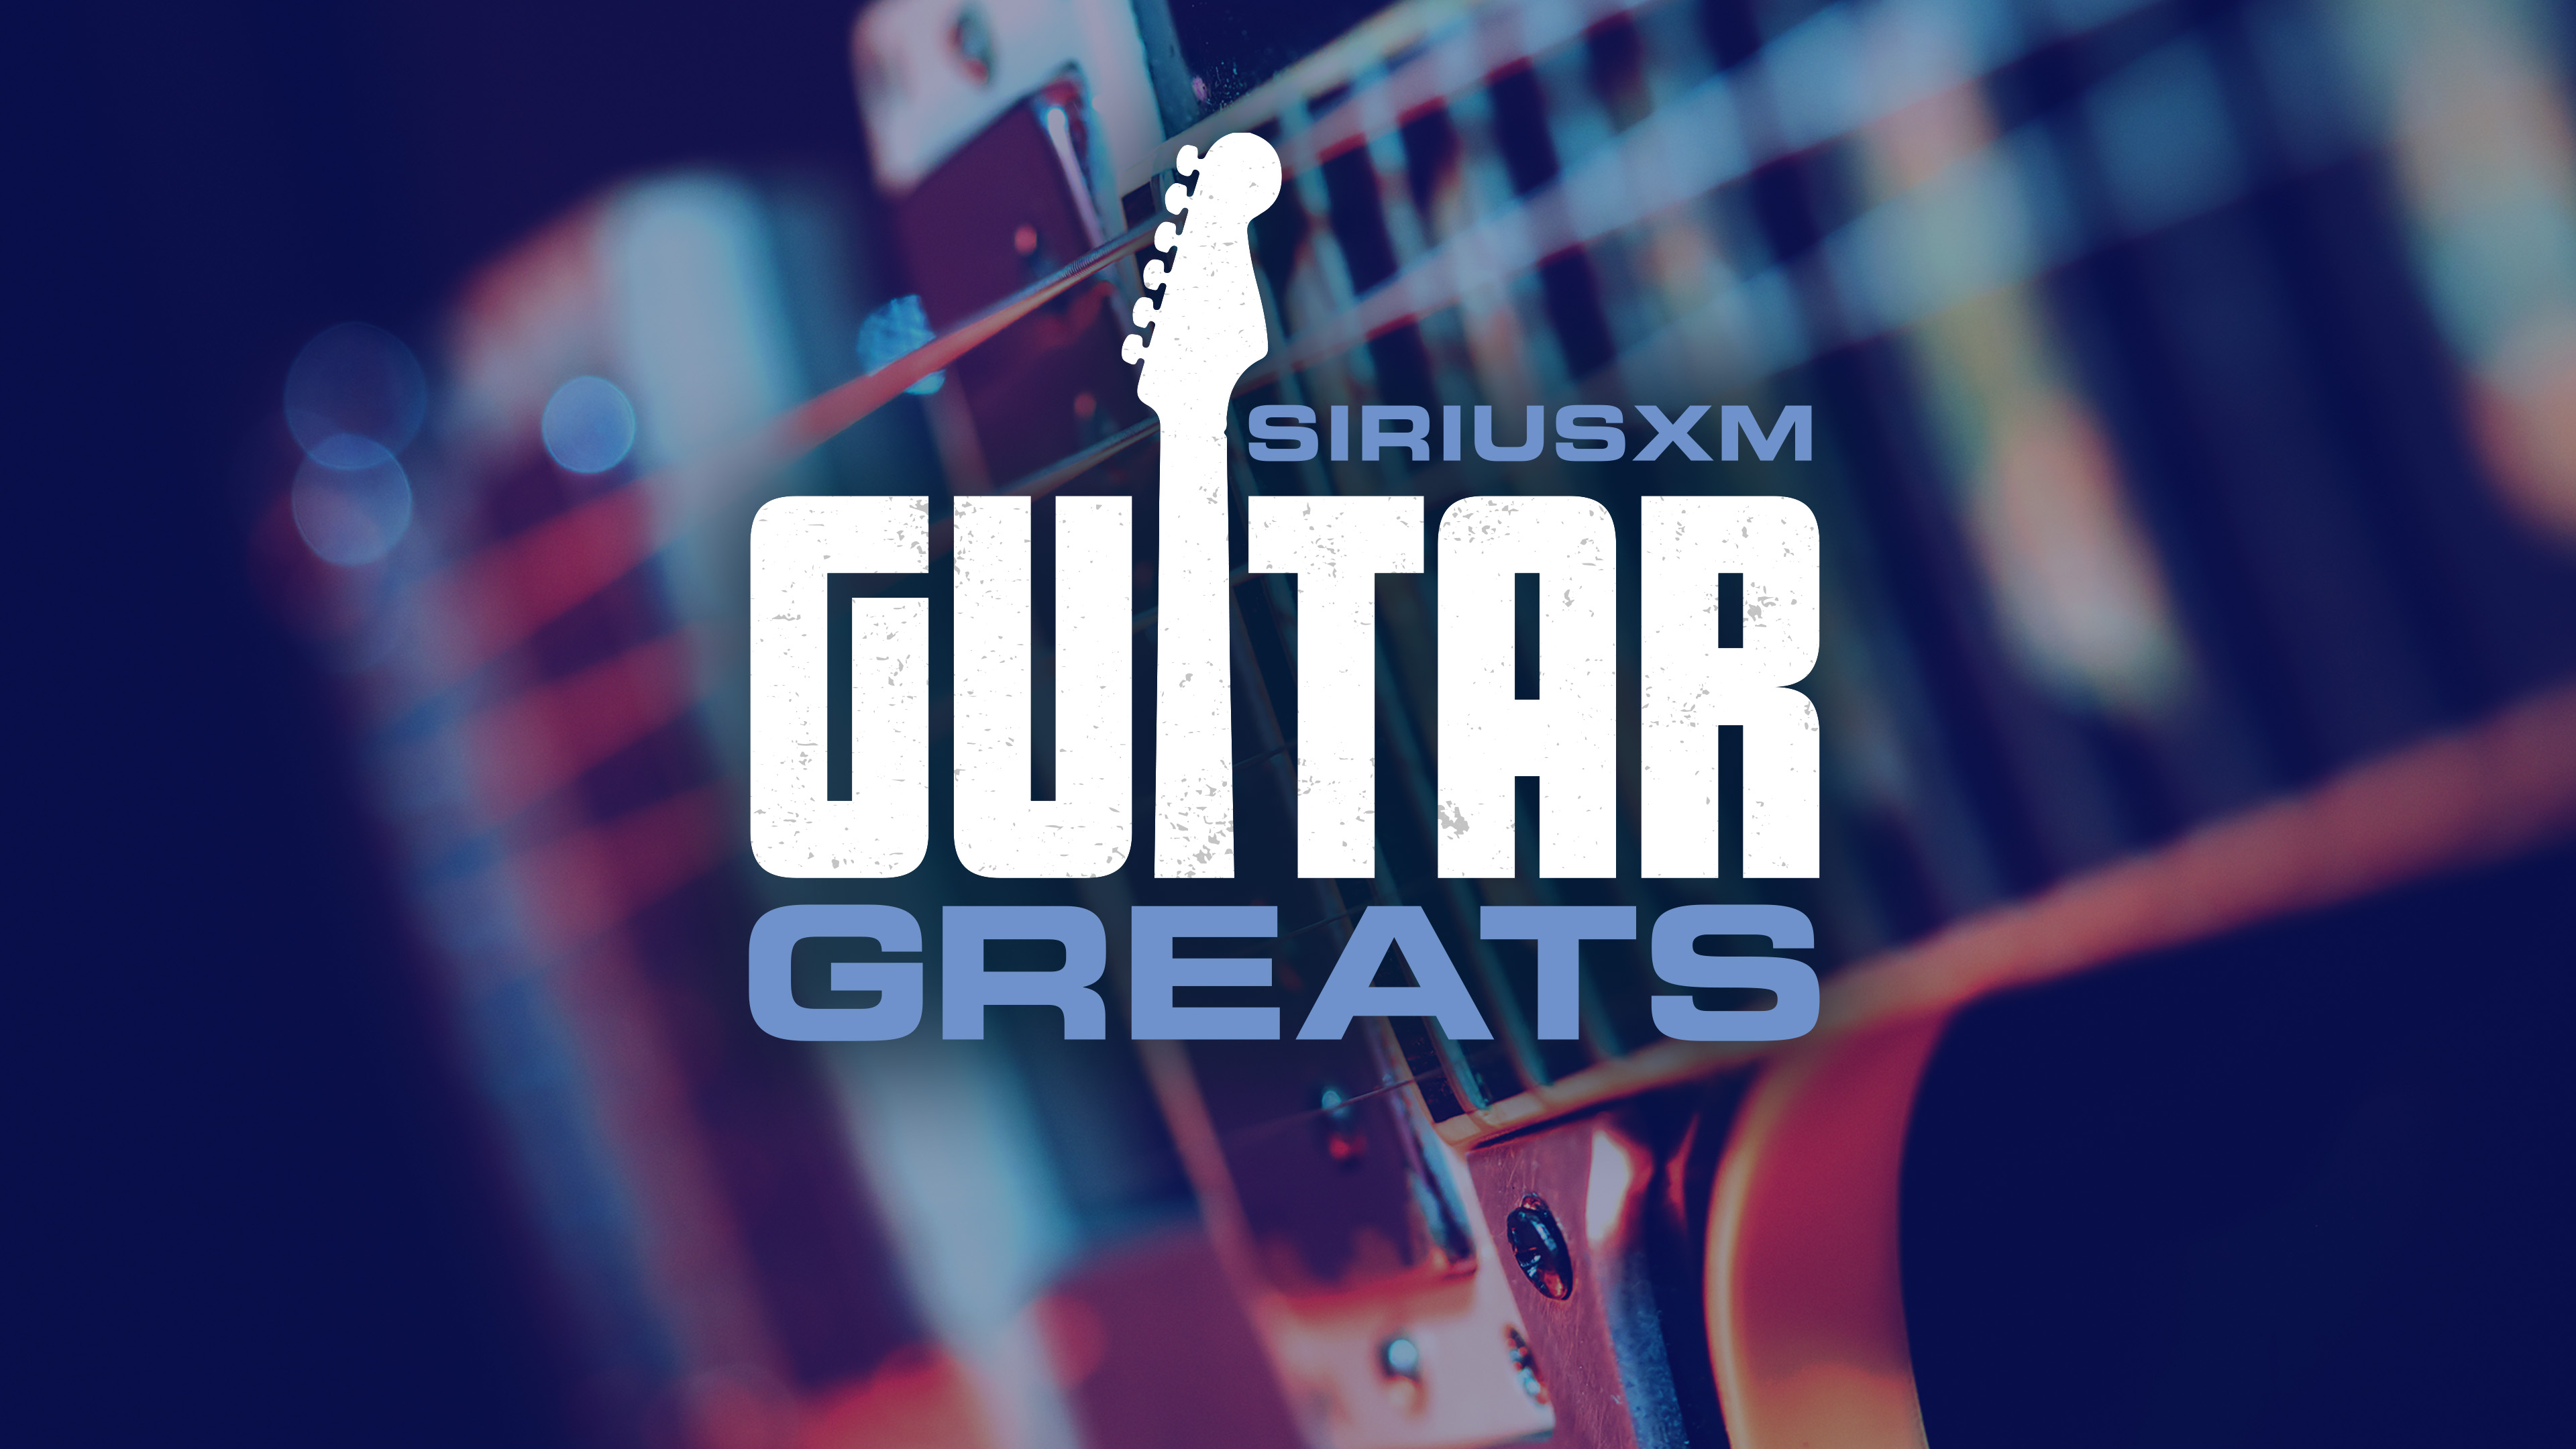 SiriusXM Guitar Greats logo over a photo of a guitar